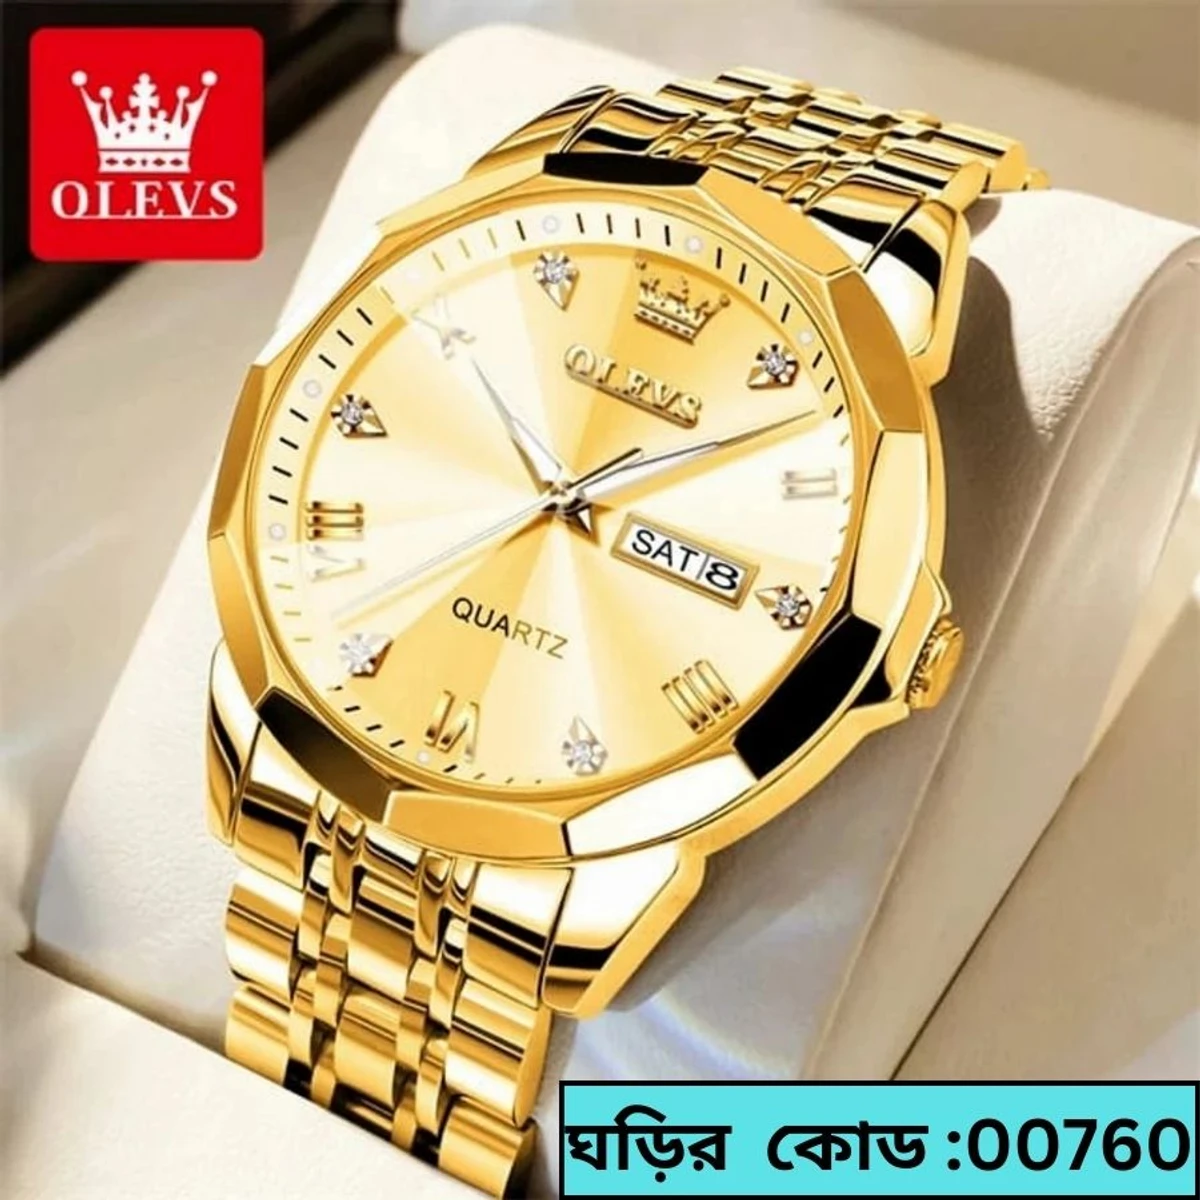 OLEVS MODEL 9931 Watch for Men Stainless Steel Watches - 9941 FULL GOLDEN- MAN WATCH - LOCK PUSH